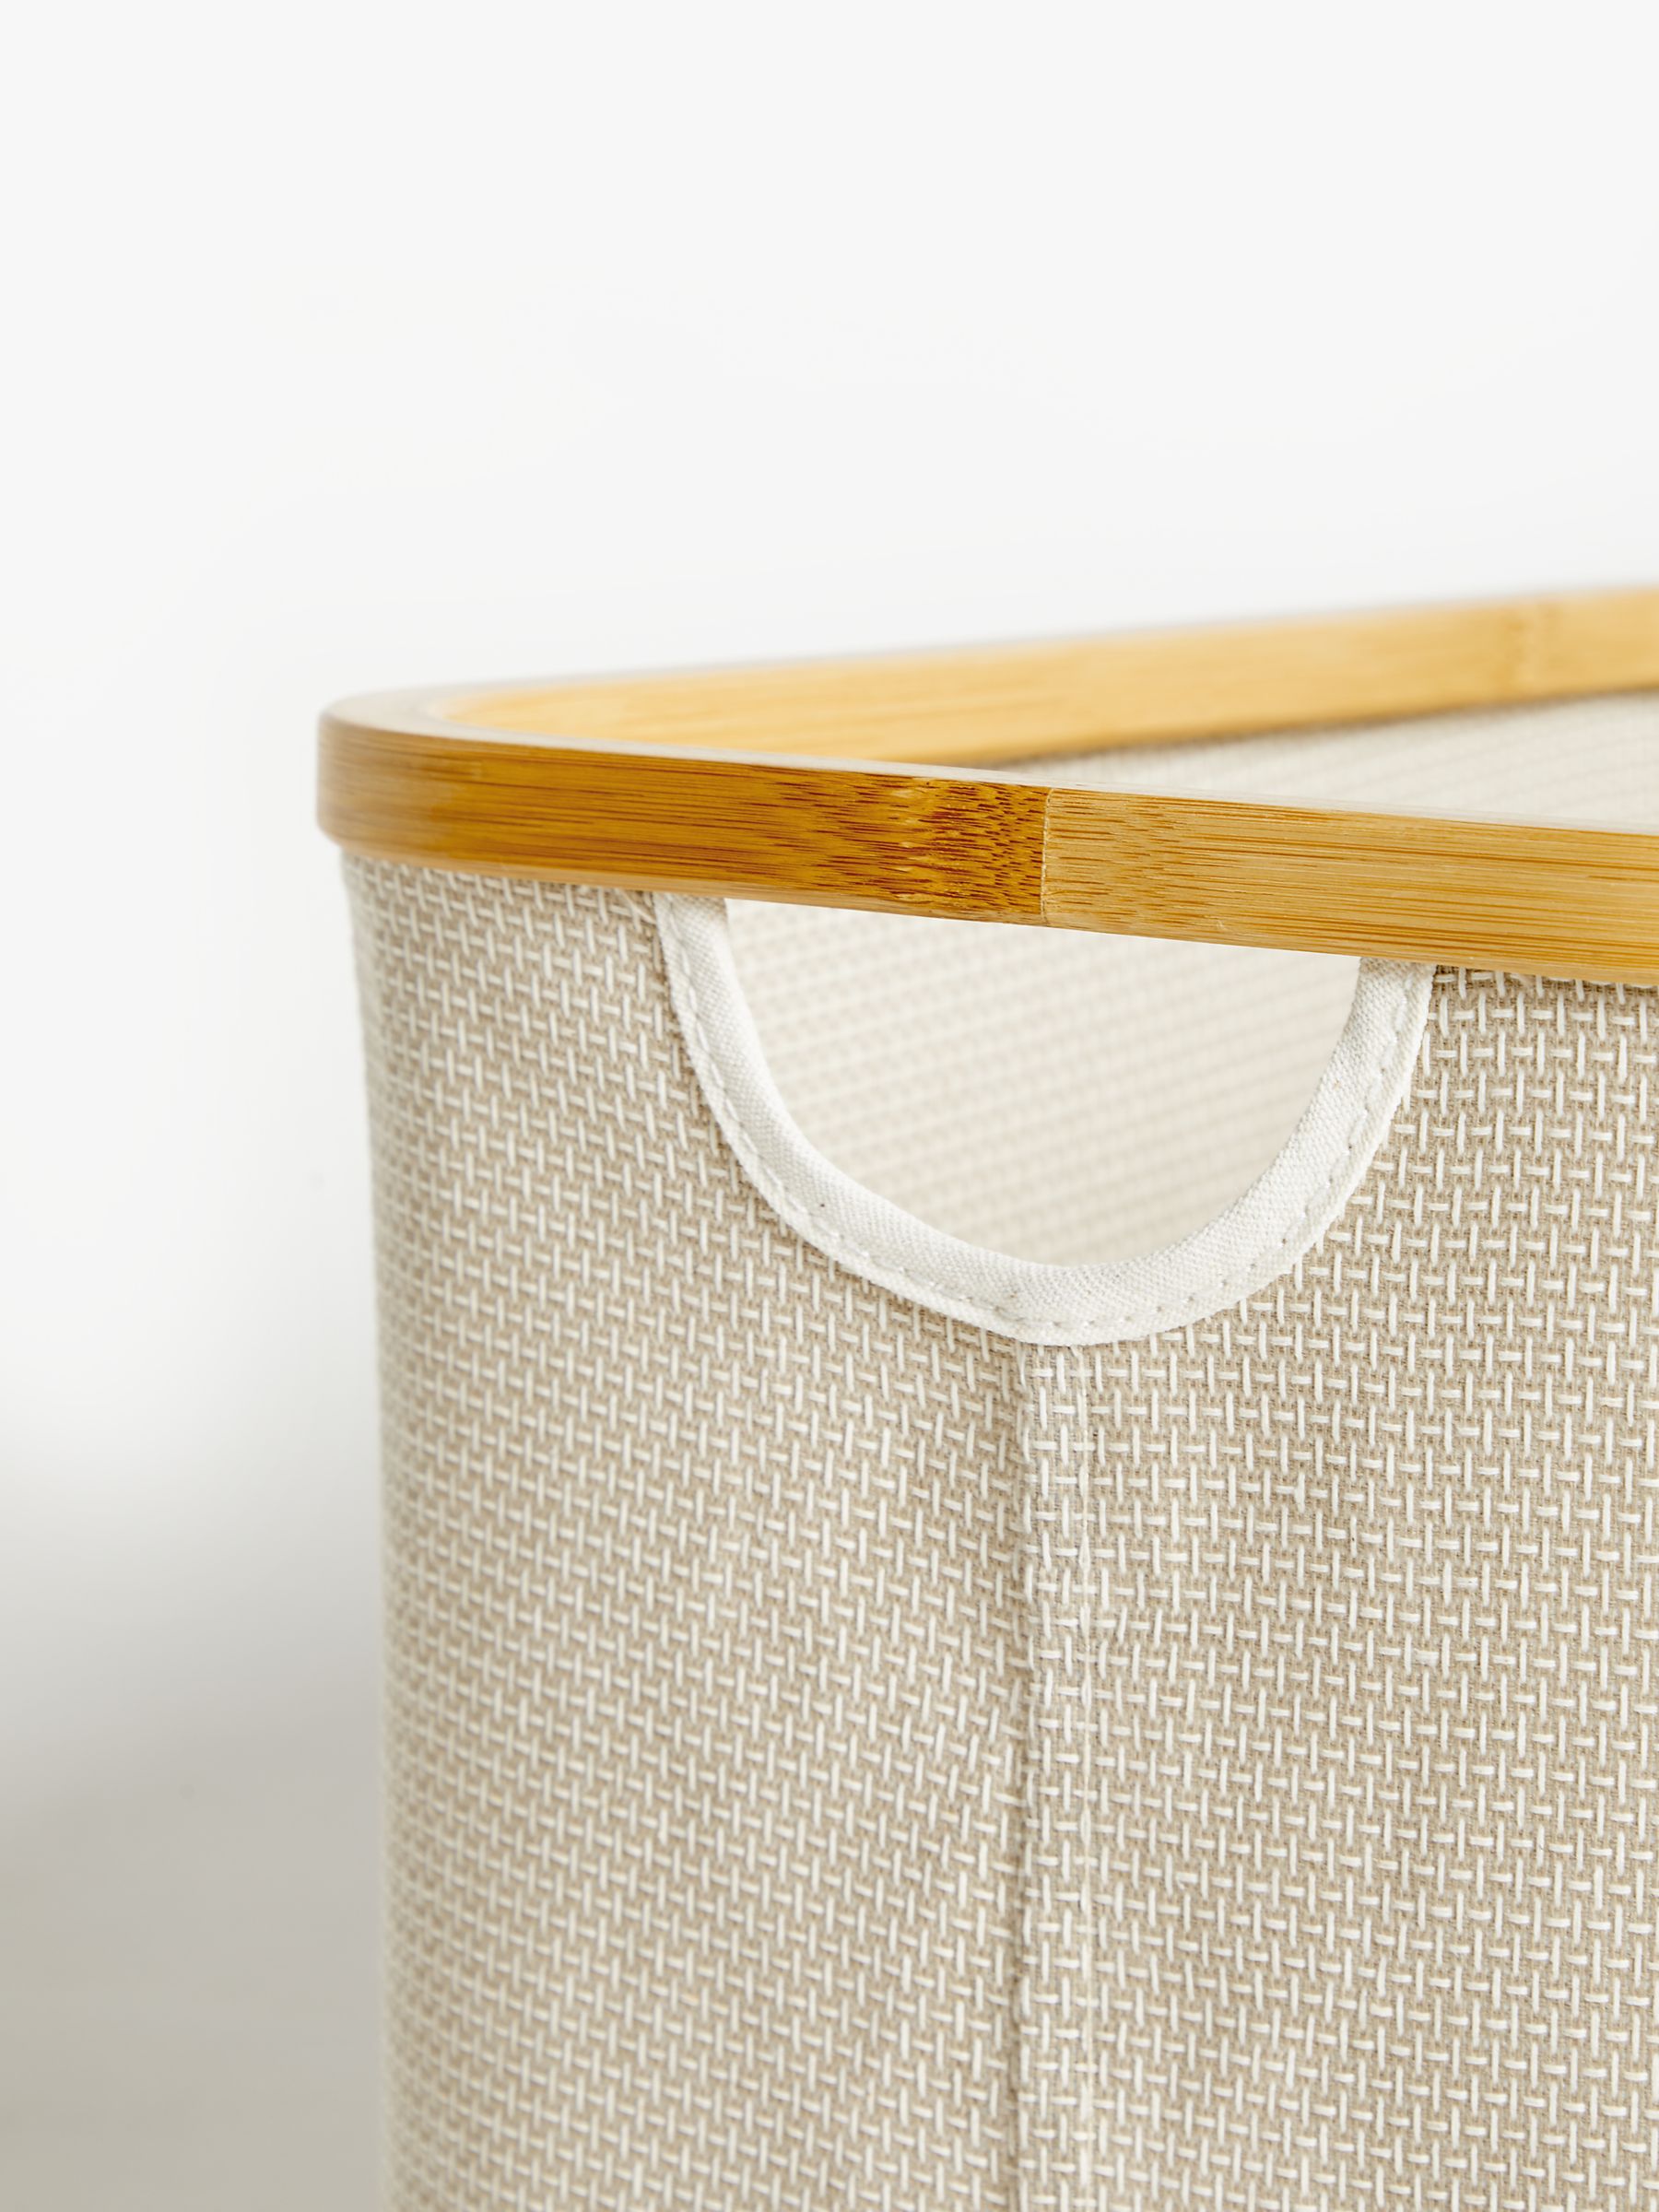 John Lewis Bamboo Rim Open Storage Basket, H25 x W53.4 x D33cm, Sand